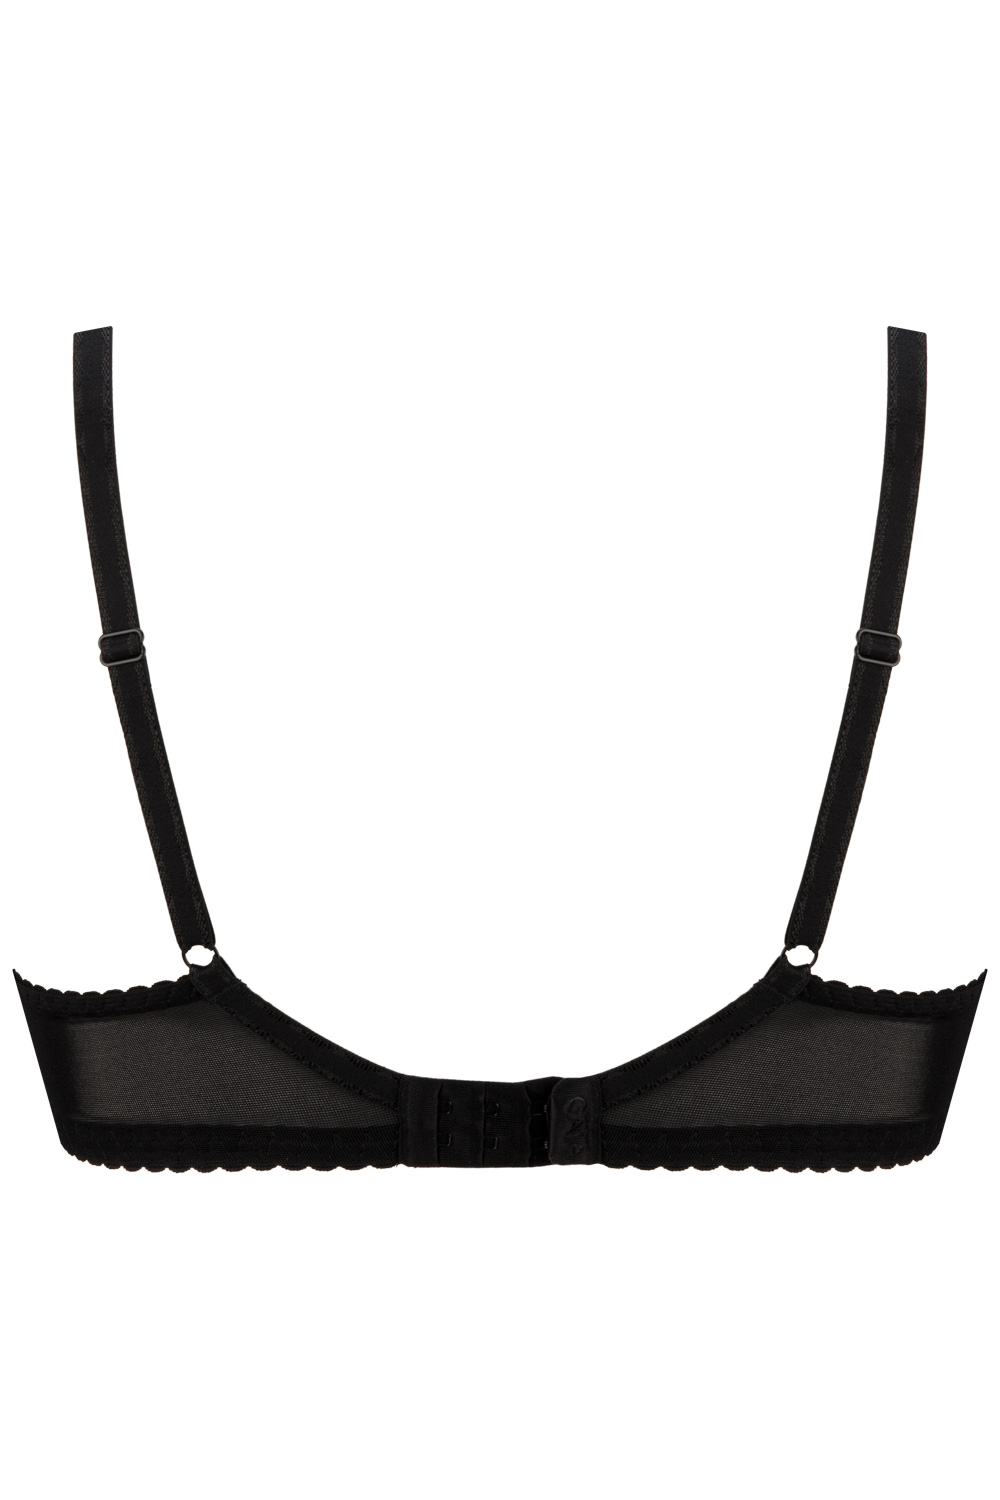 Gaia 594 Sandy comfortable semi padded women's bra lingerie - made in ...